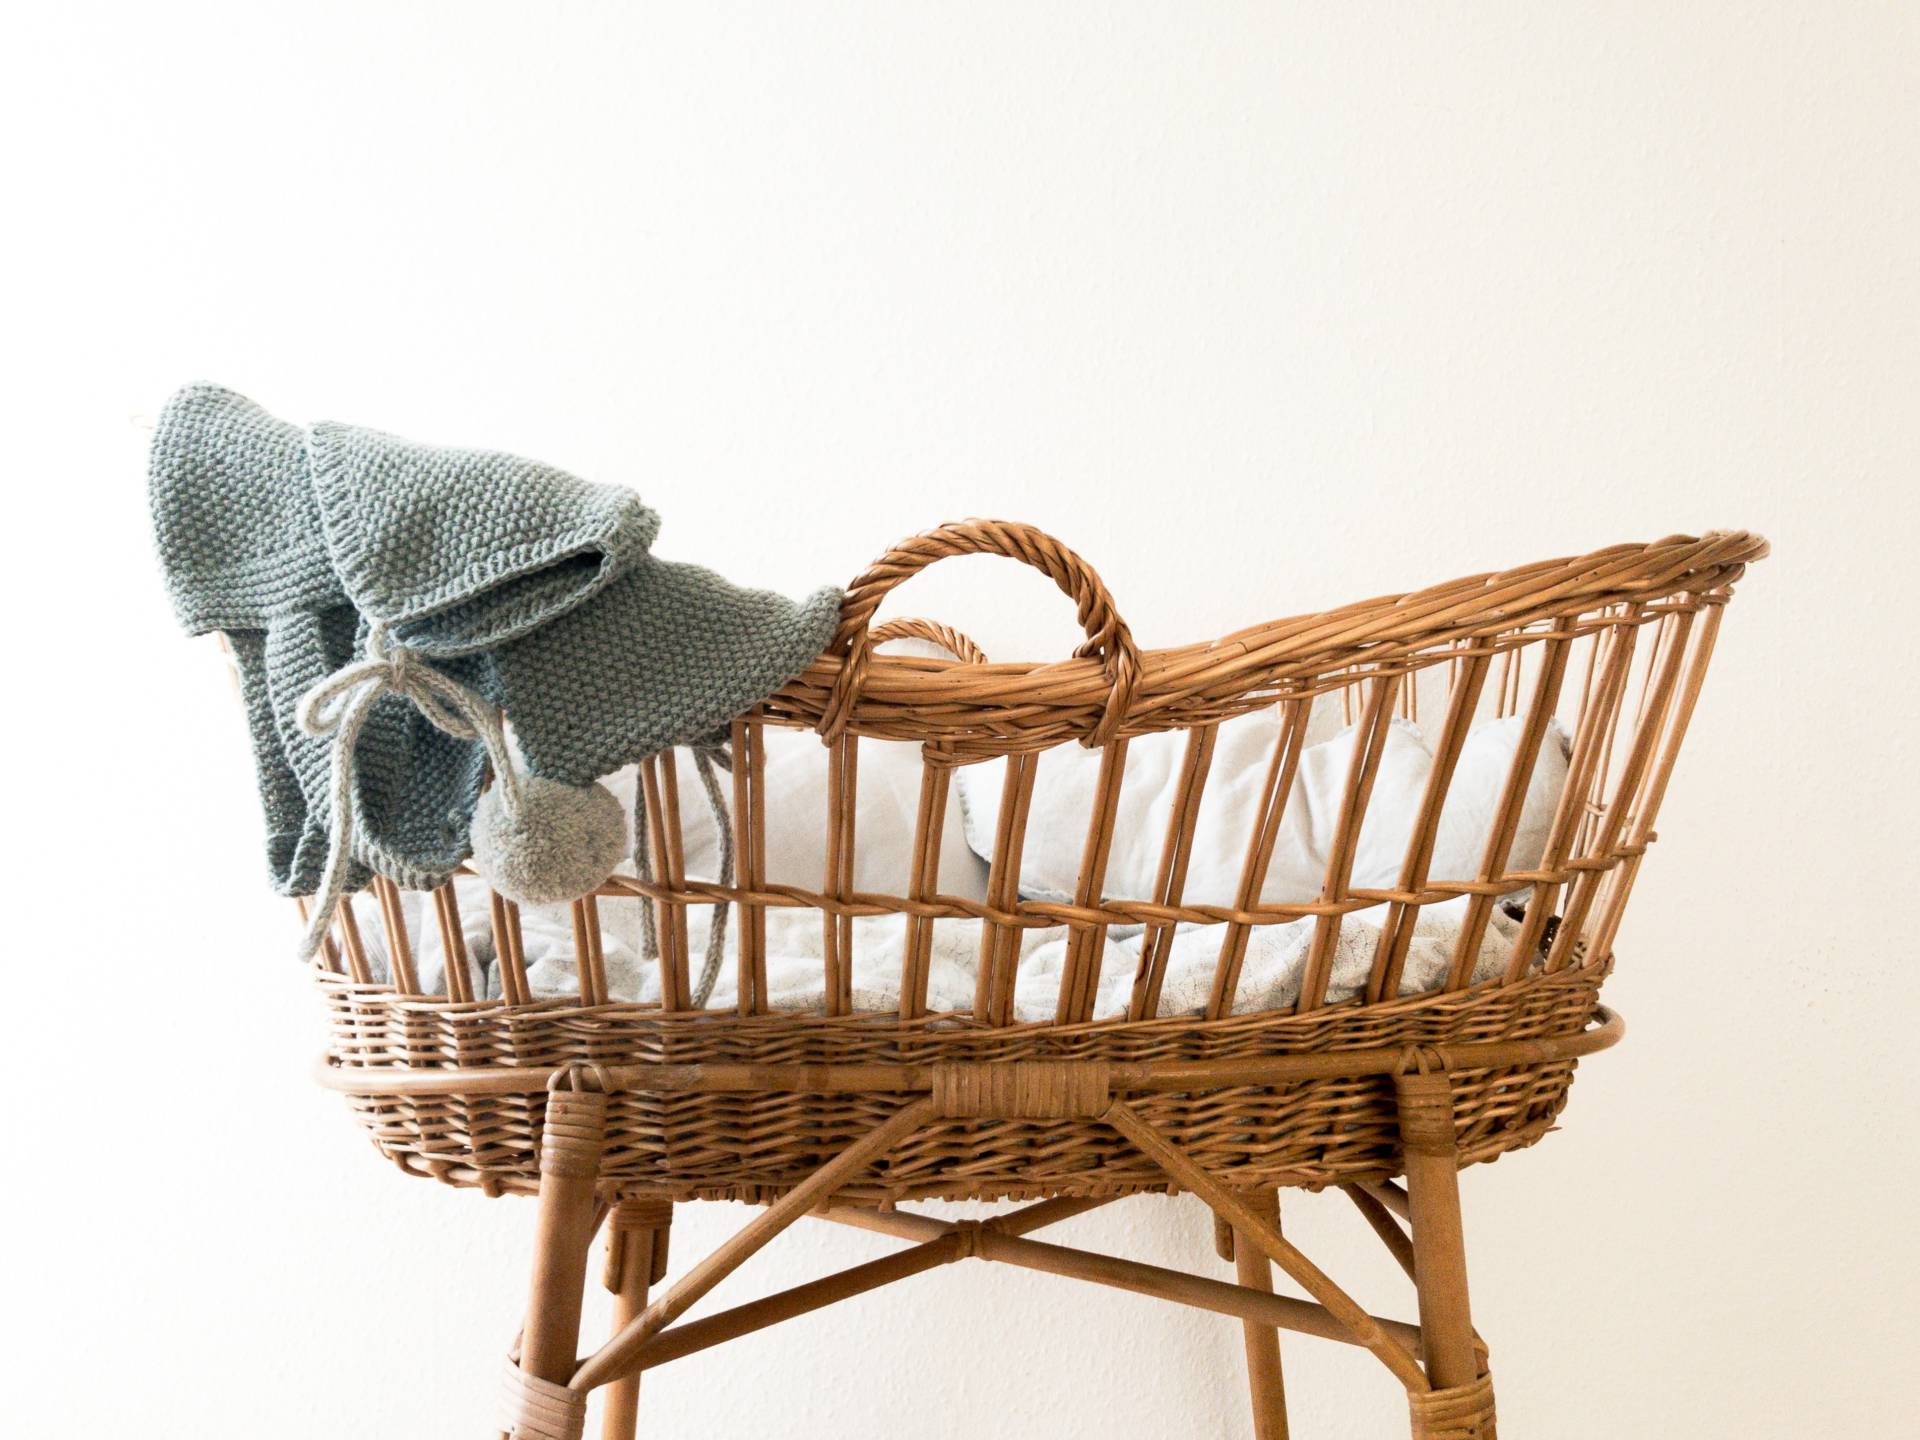 grey textile hanging on brown wicker basket